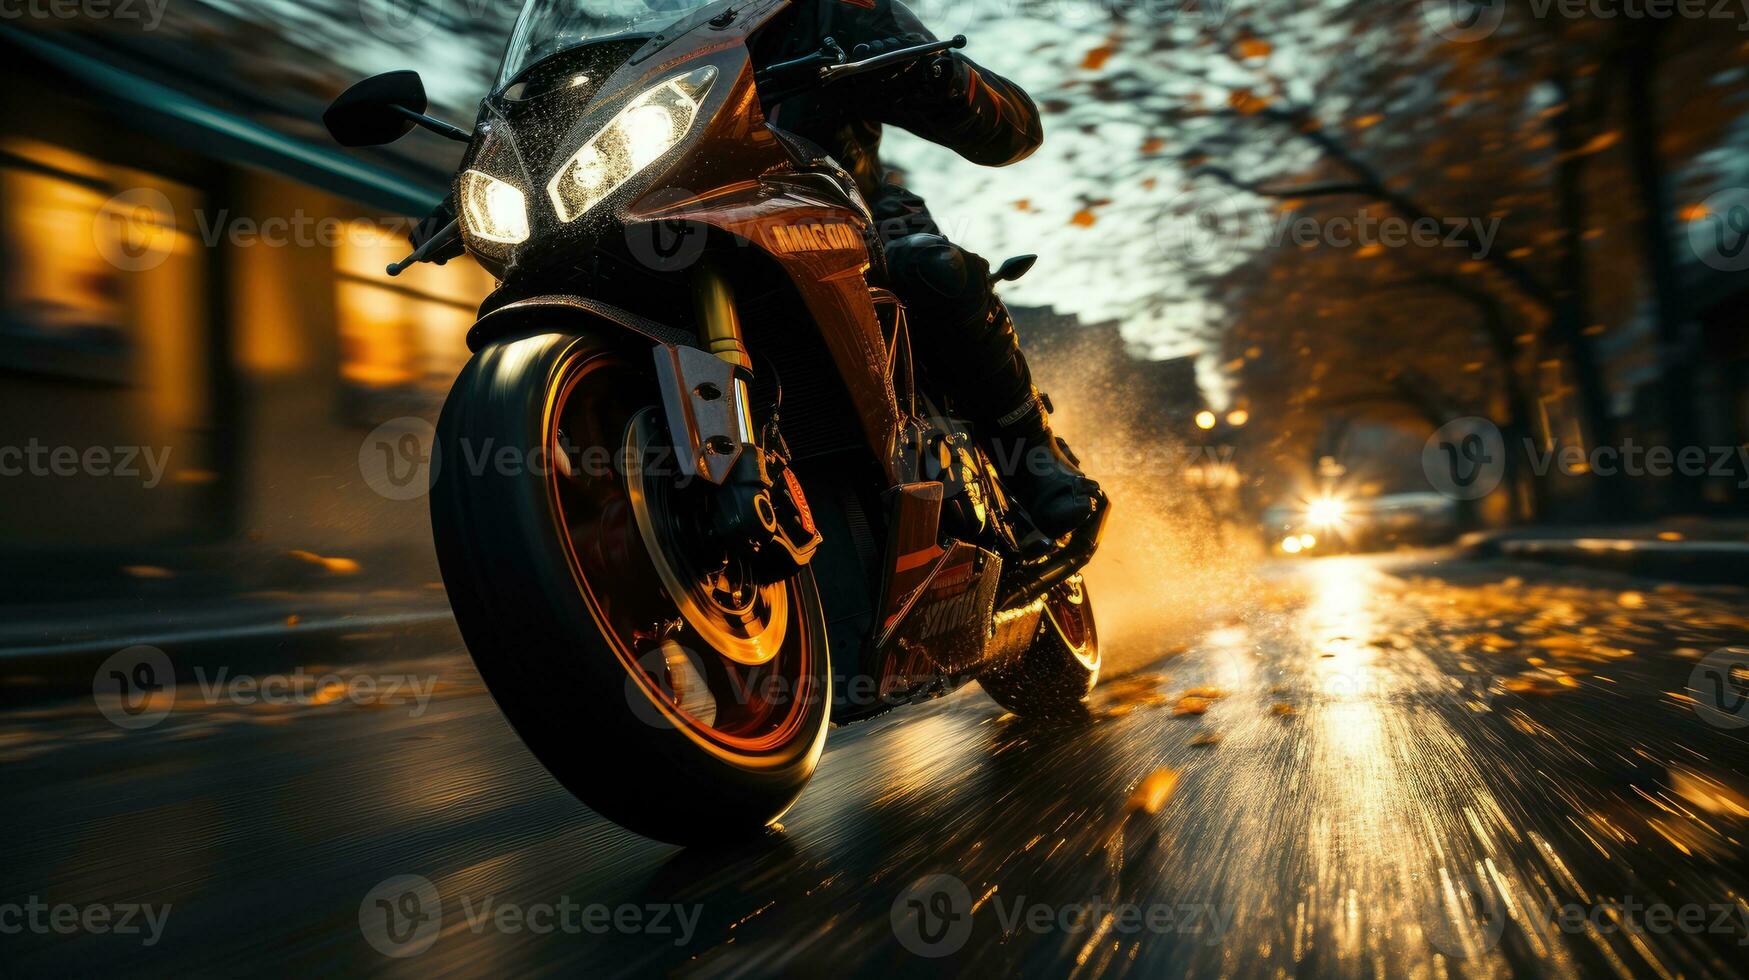 Urban Wheelie - A Dynamic Action Shot Of A Motorcycle Performing A Wheelie On An Urban Street. Generative AI photo